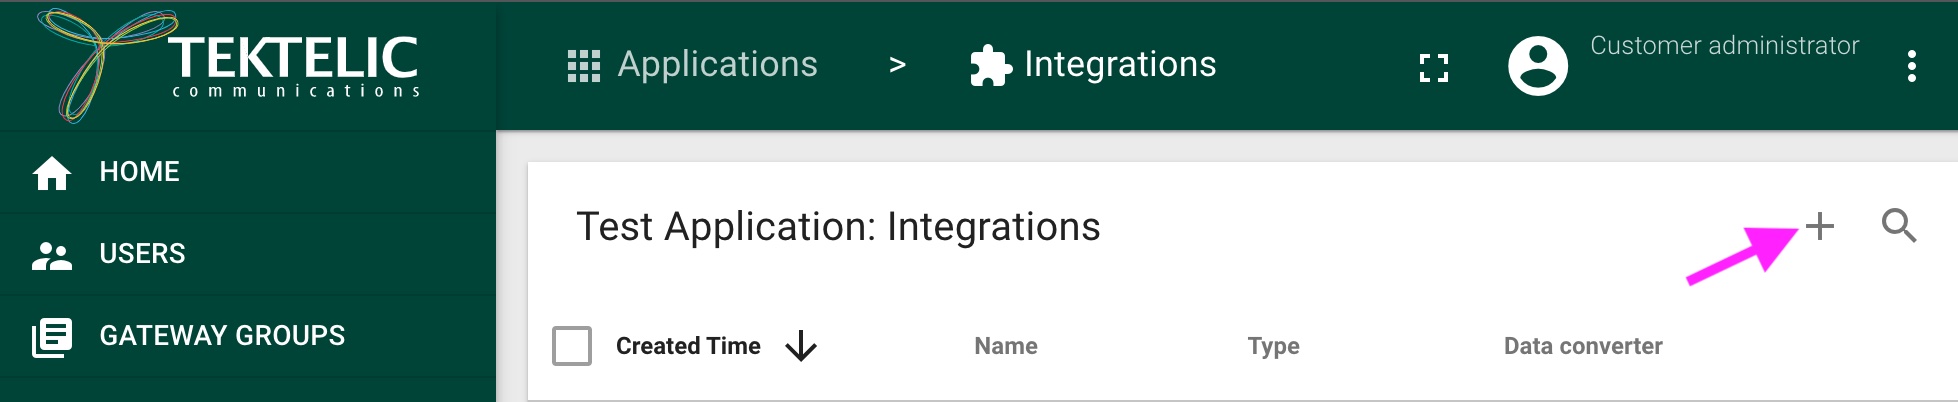 integration_1.2